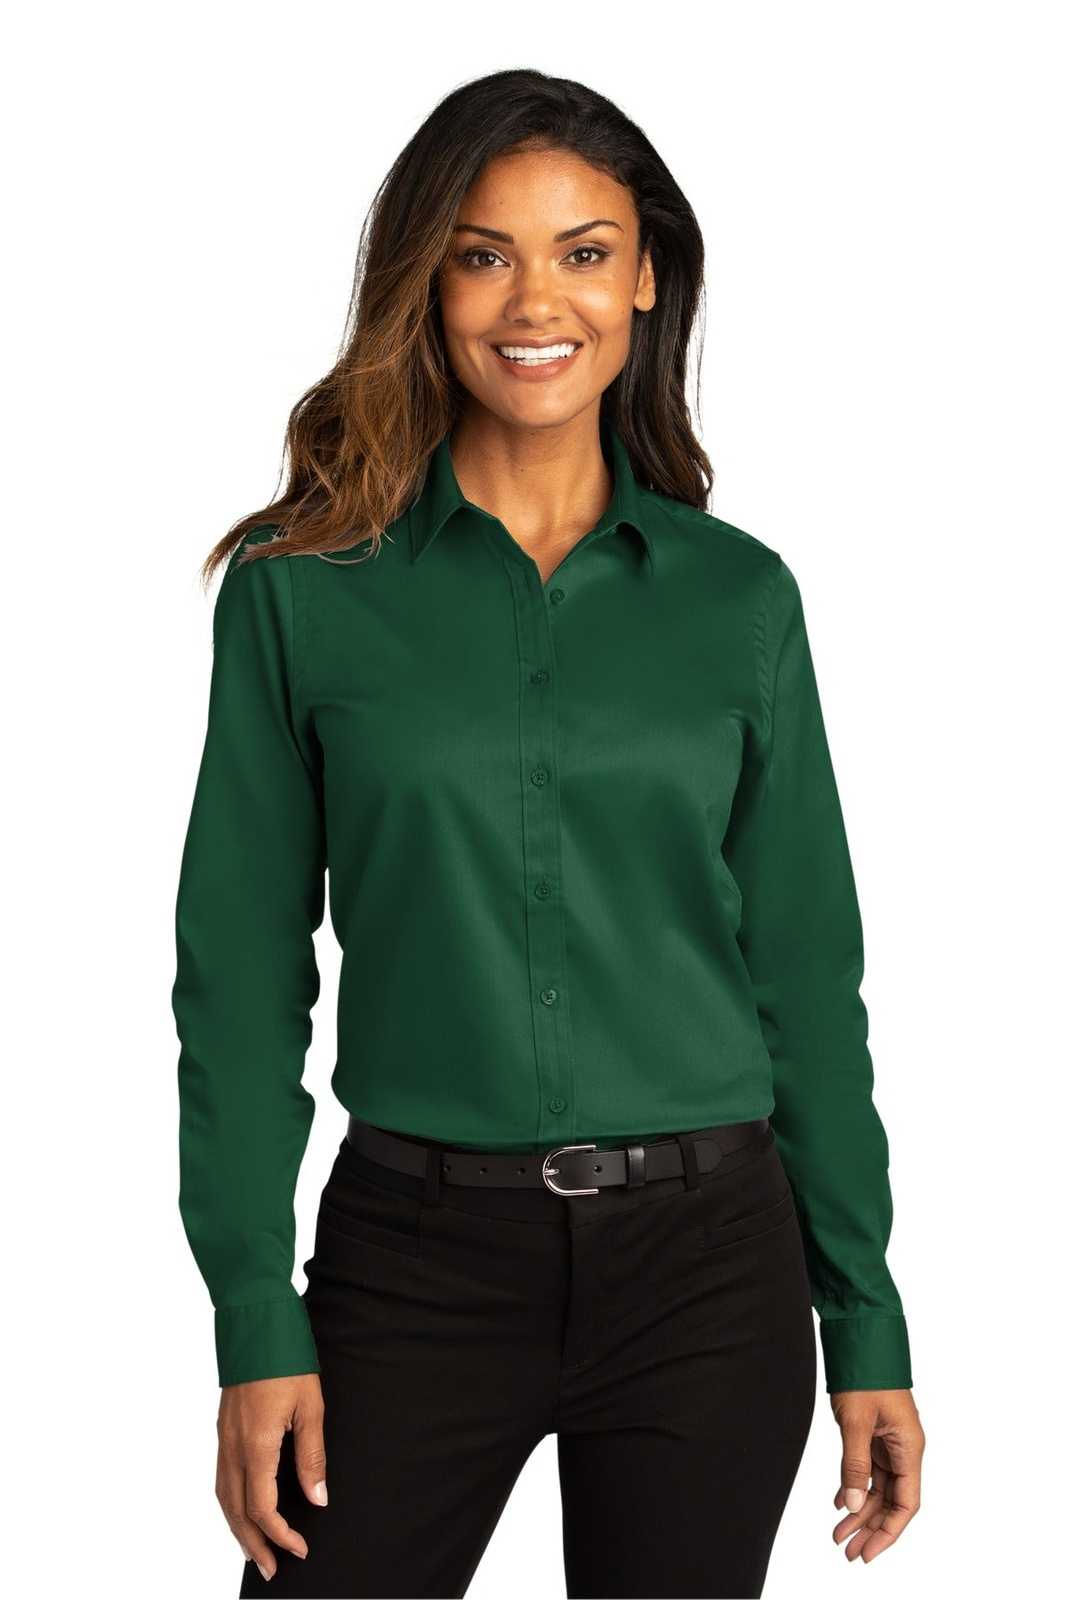 Port Authority LW808 Ladies Long Sleeve SuperPro React Twill Shirt - Dark Green - HIT a Double - 1